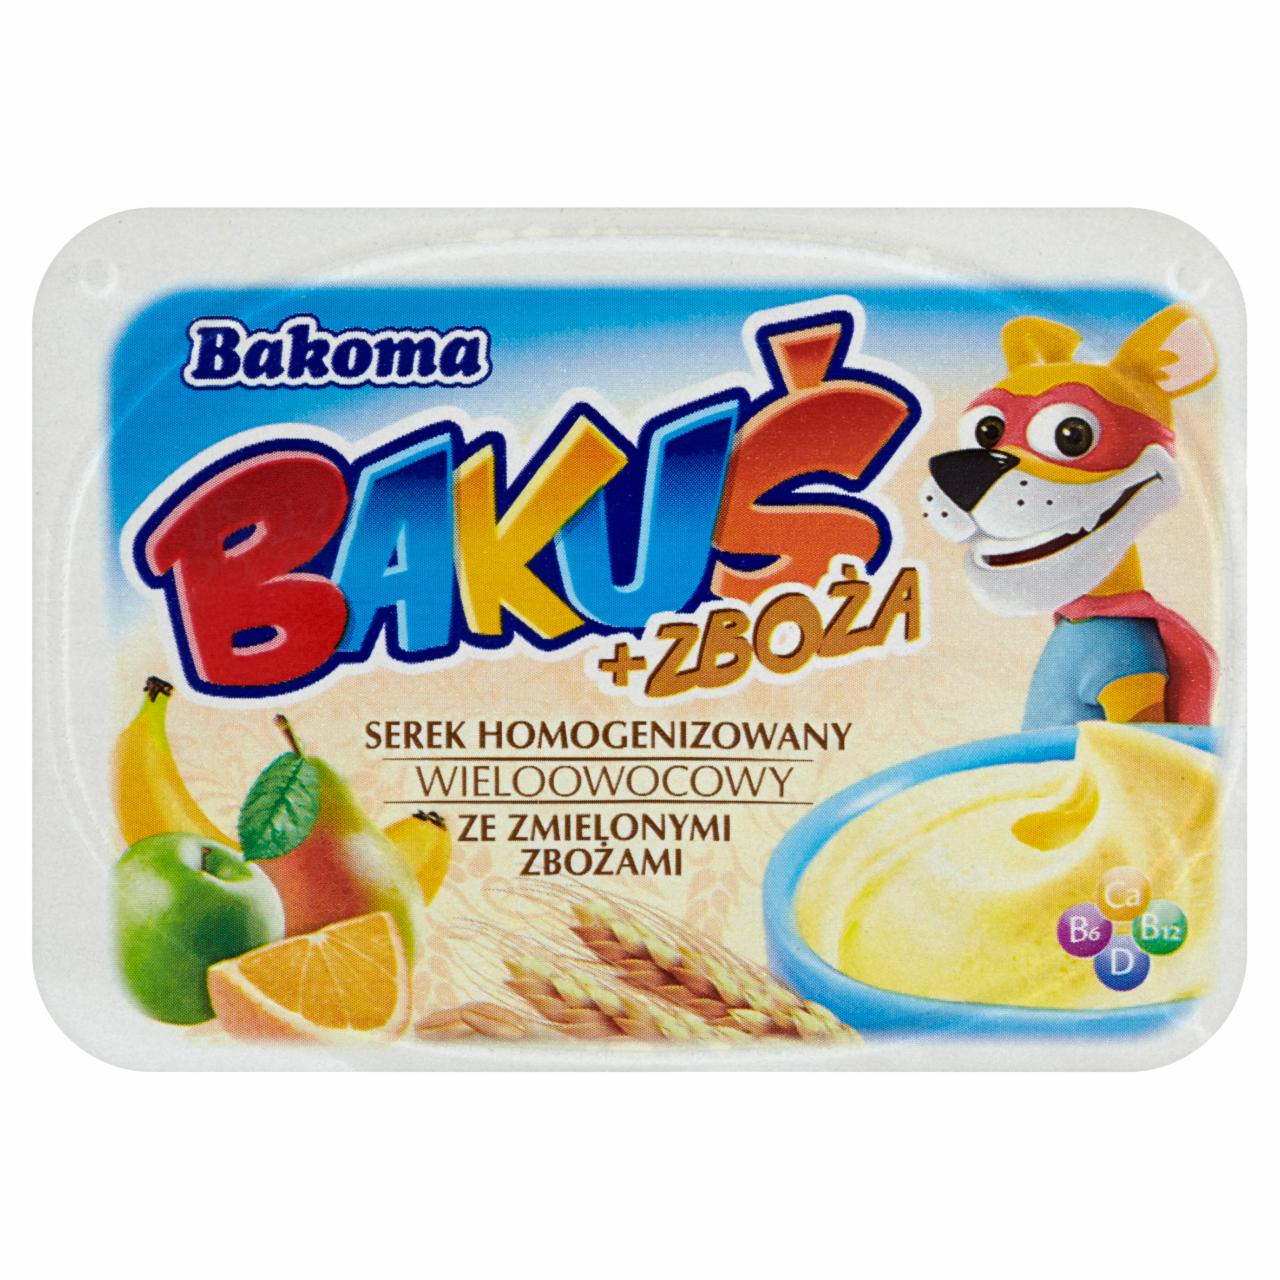 Photo - Bakoma Bakuś + Zboża Multifruit with Ground Cereals Fromage Frais 125 g